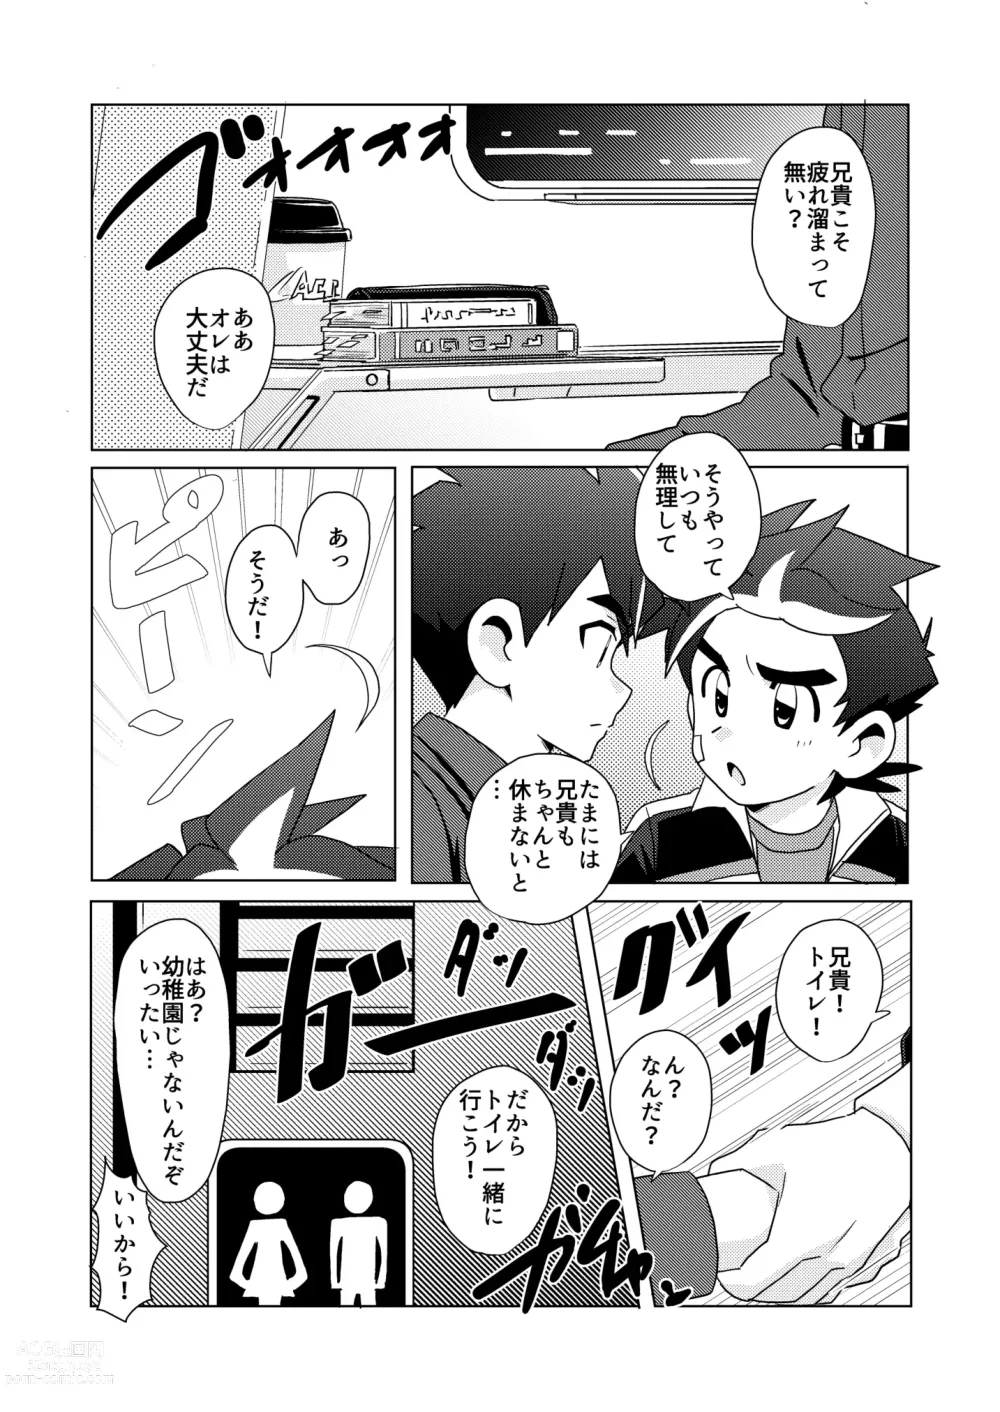 Page 5 of doujinshi DRAGON BROTHERS